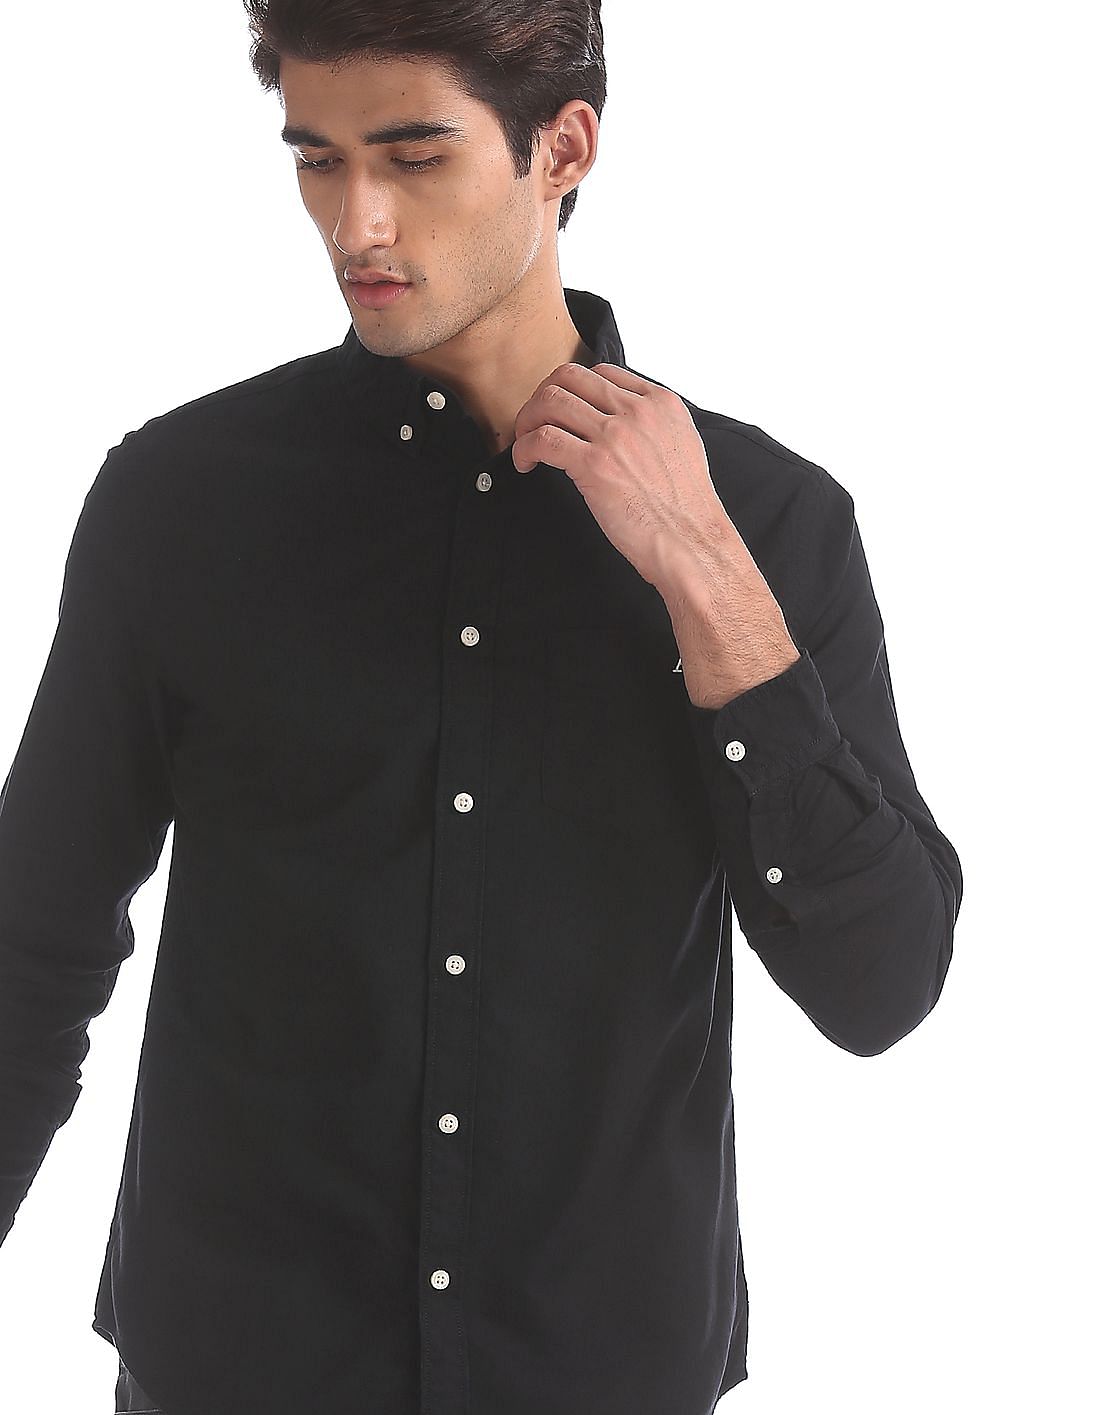 Buy Aeropostale Black Button Down Collar Solid Shirt - NNNOW.com